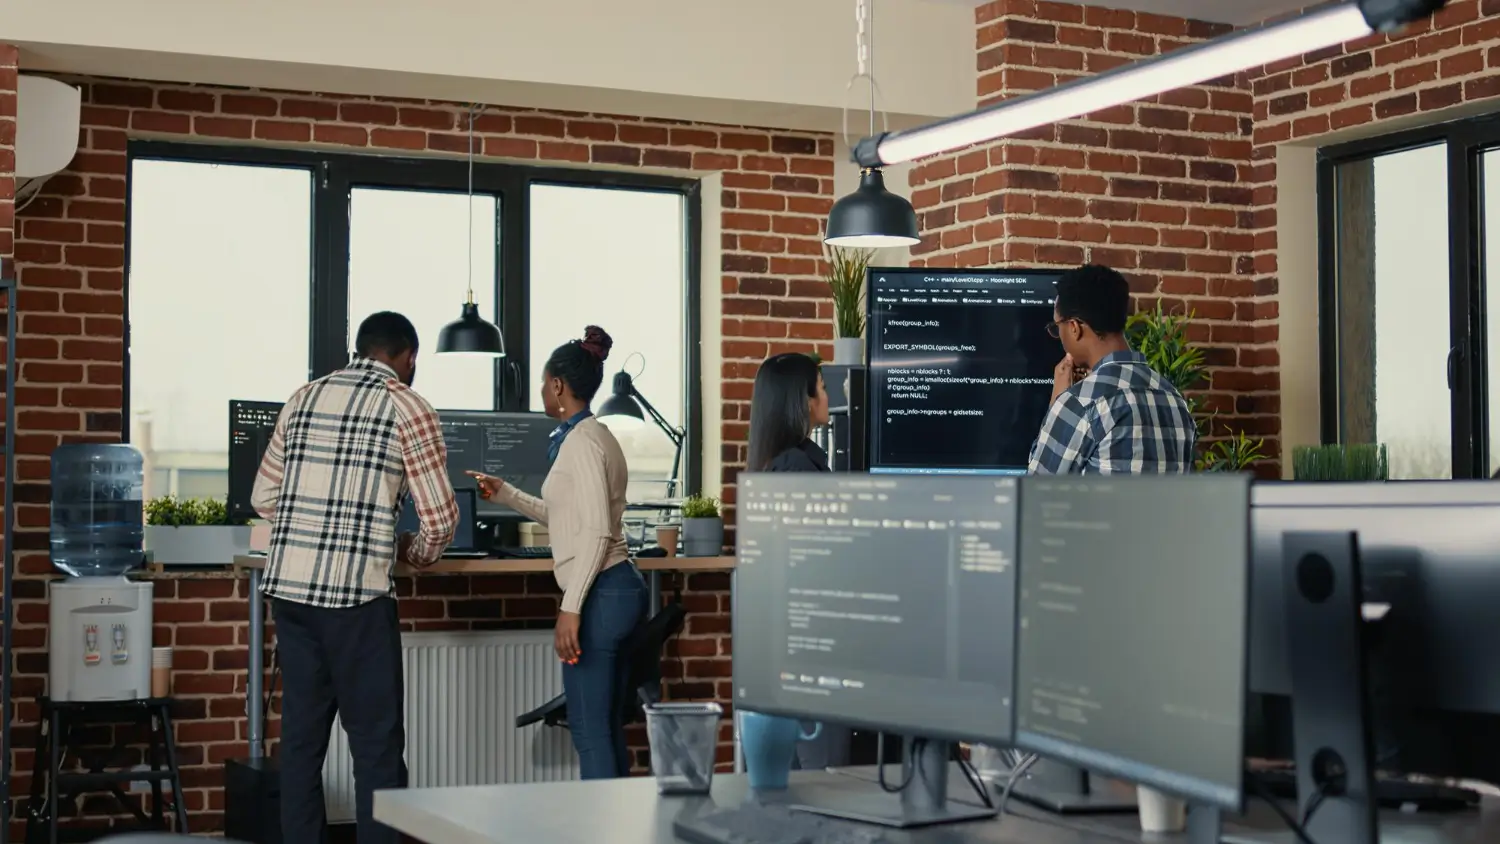 Software development team analyzing code on multiple screens inside an office